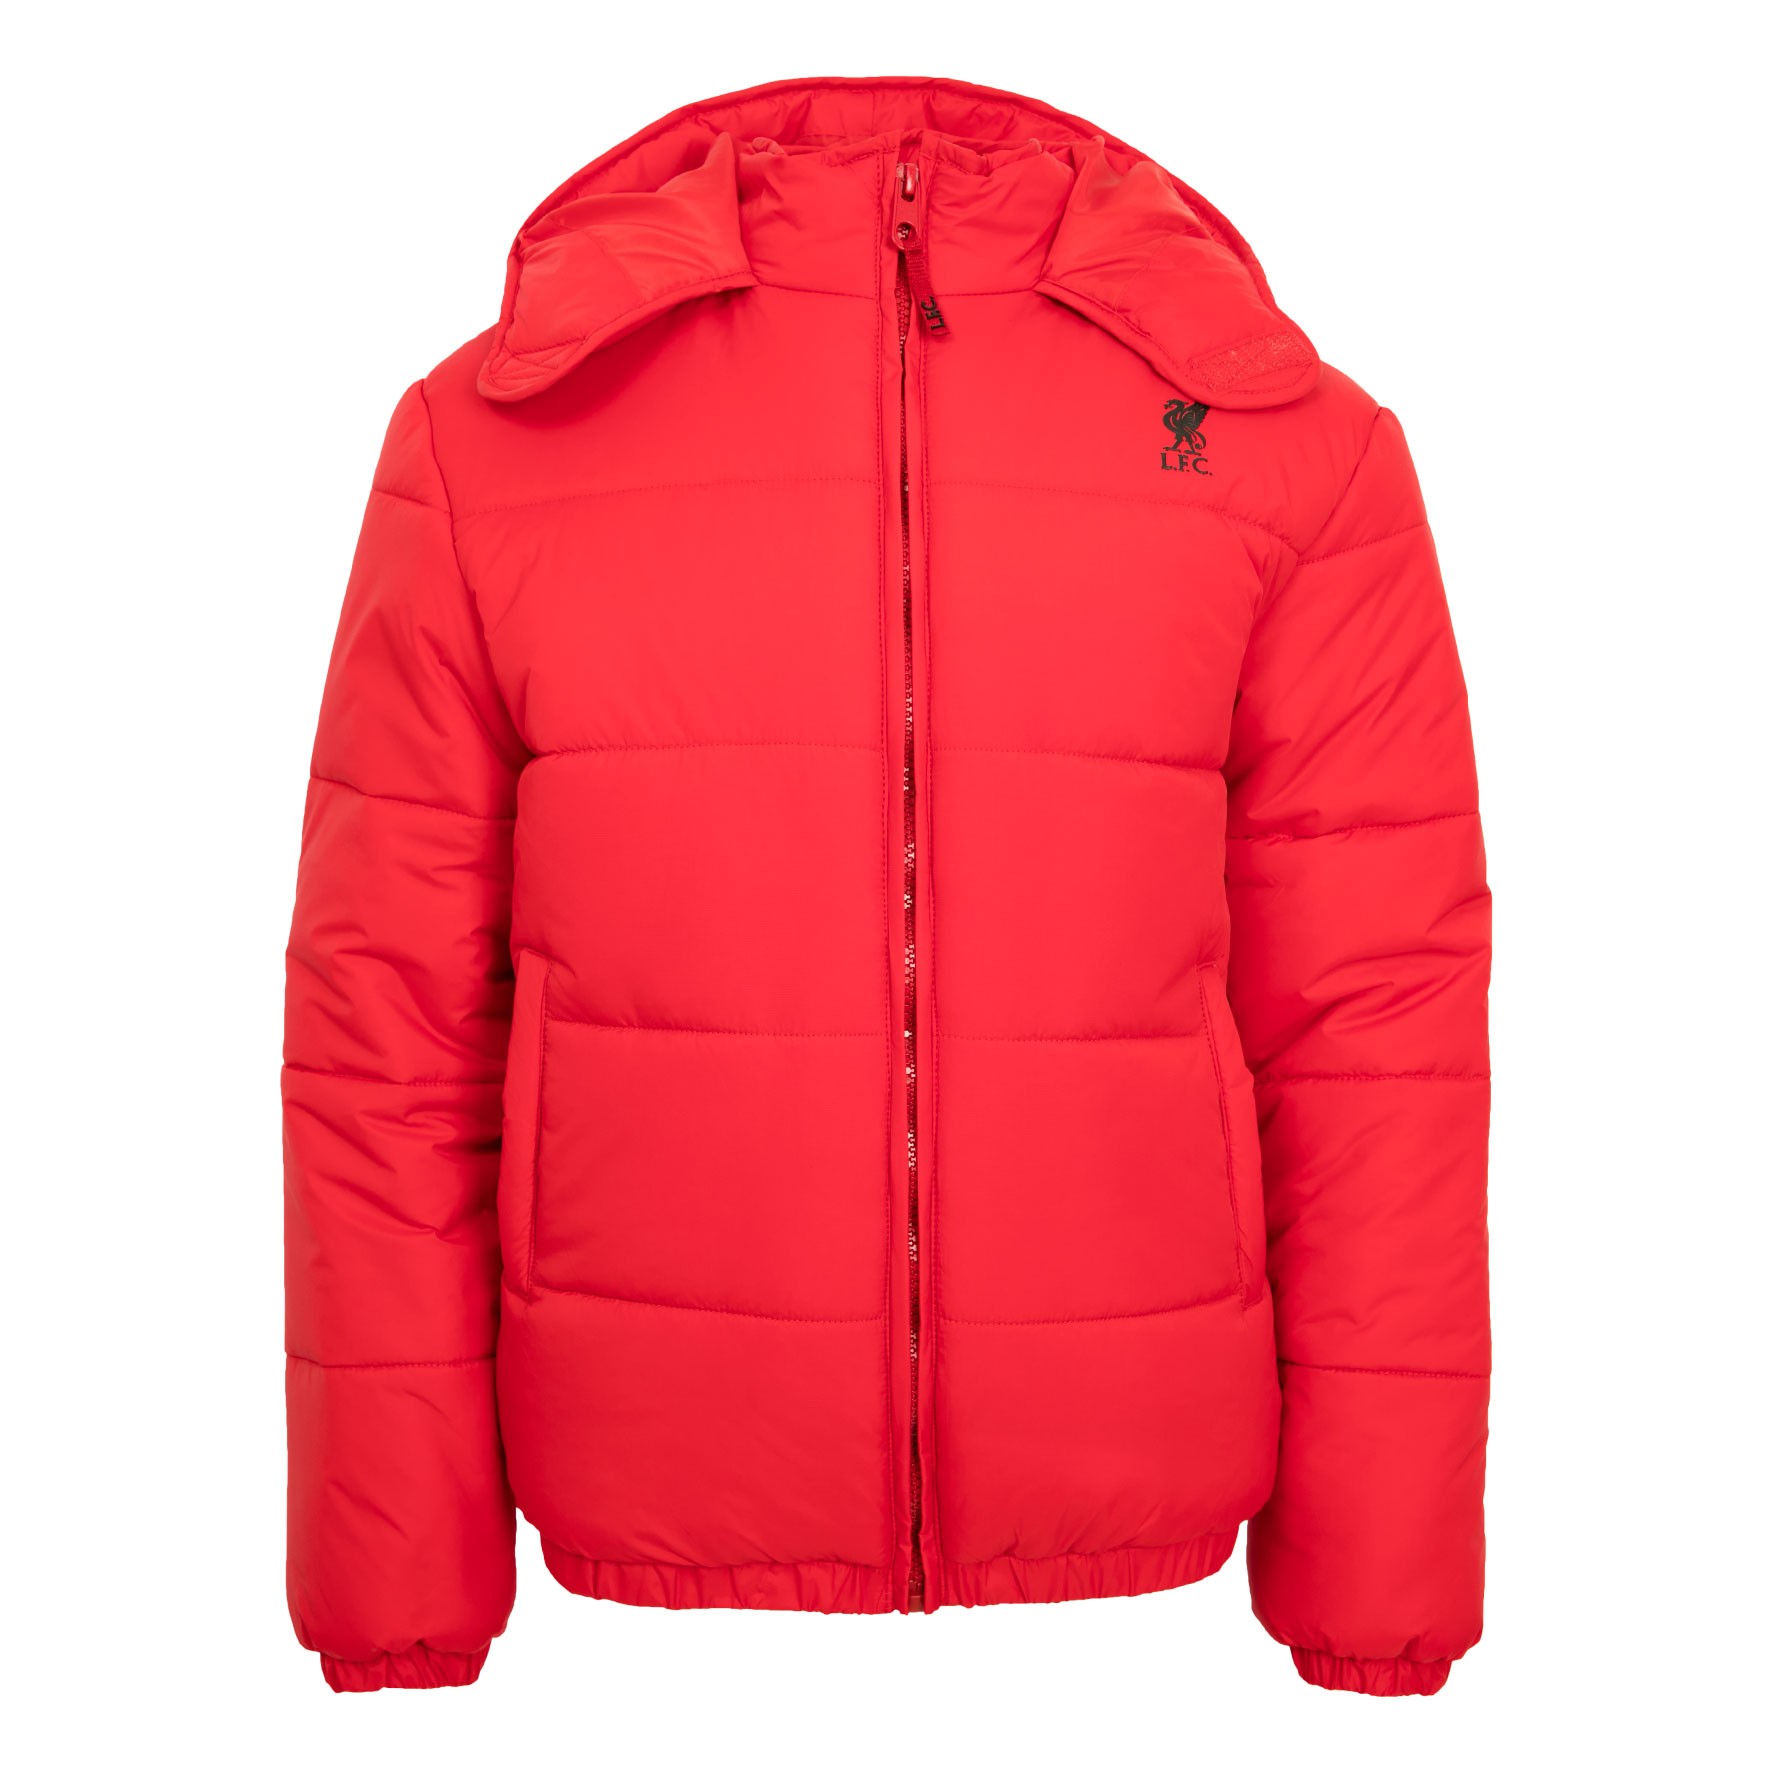 LFC Boys Red Hooded Puffa Jacket | Anfield Shop